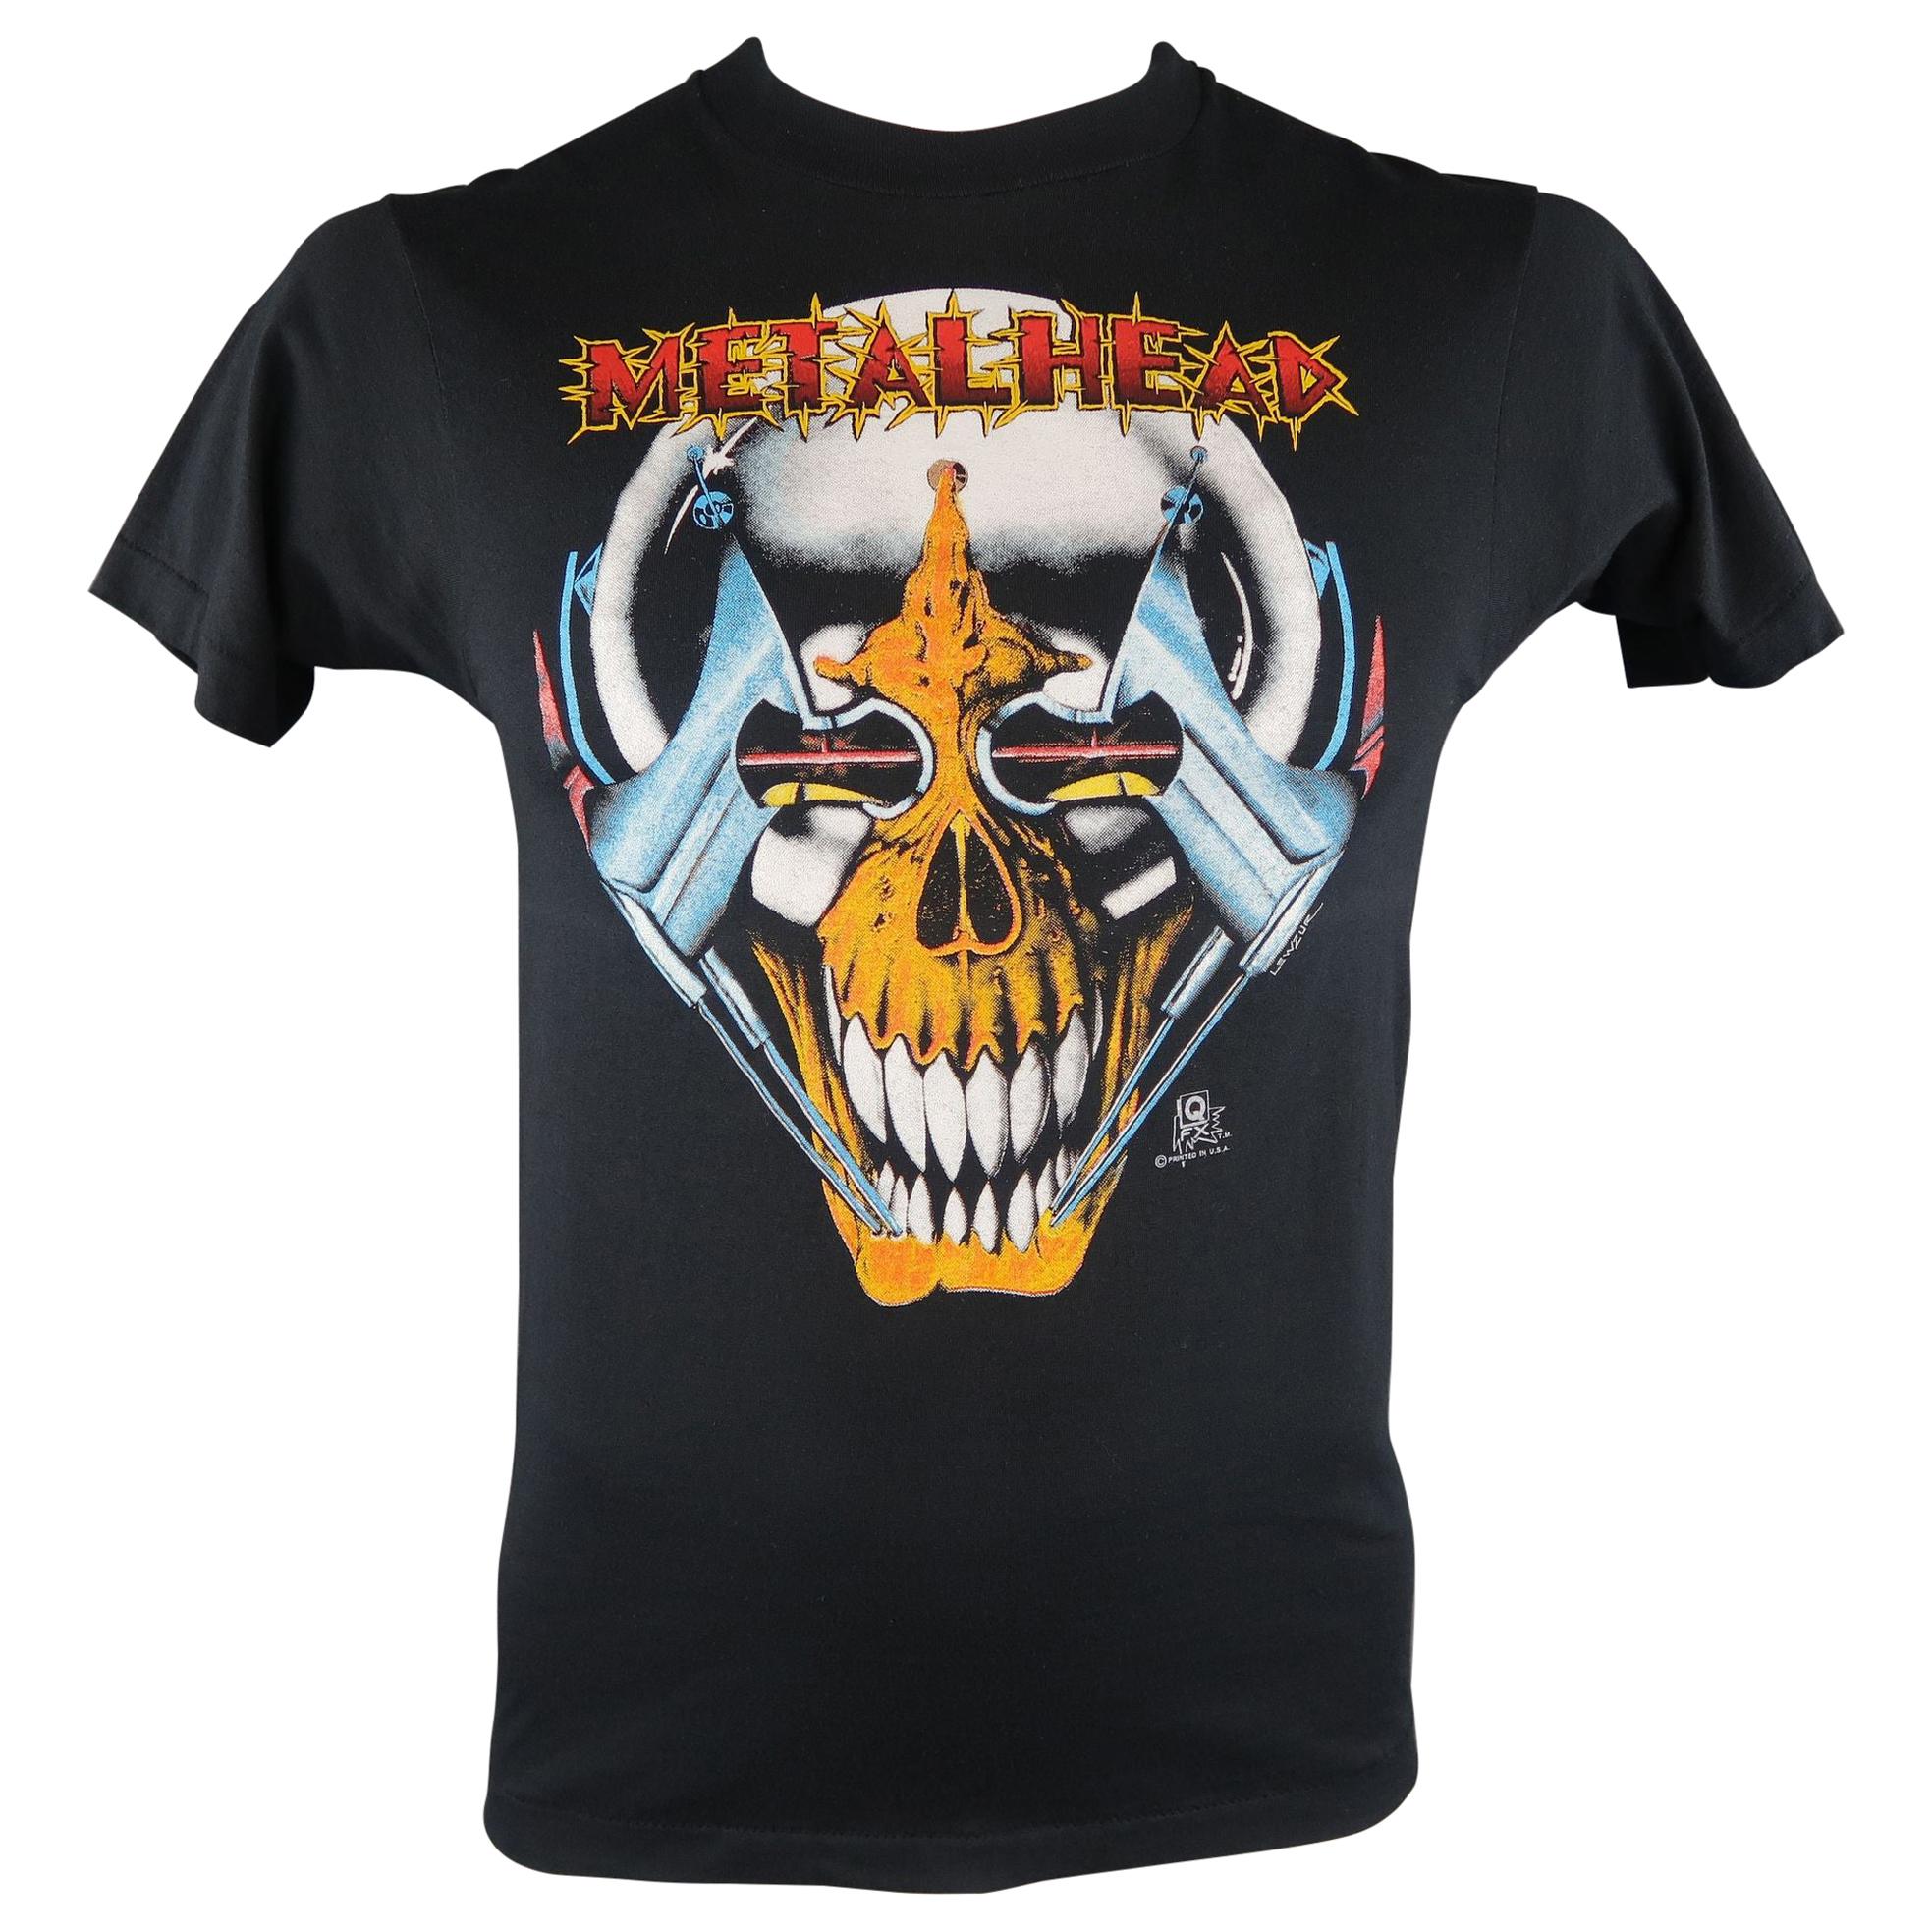 VINTAGE Size M Black Metal Head Rock 80s Graphic Cotton / Polyester T-shirt